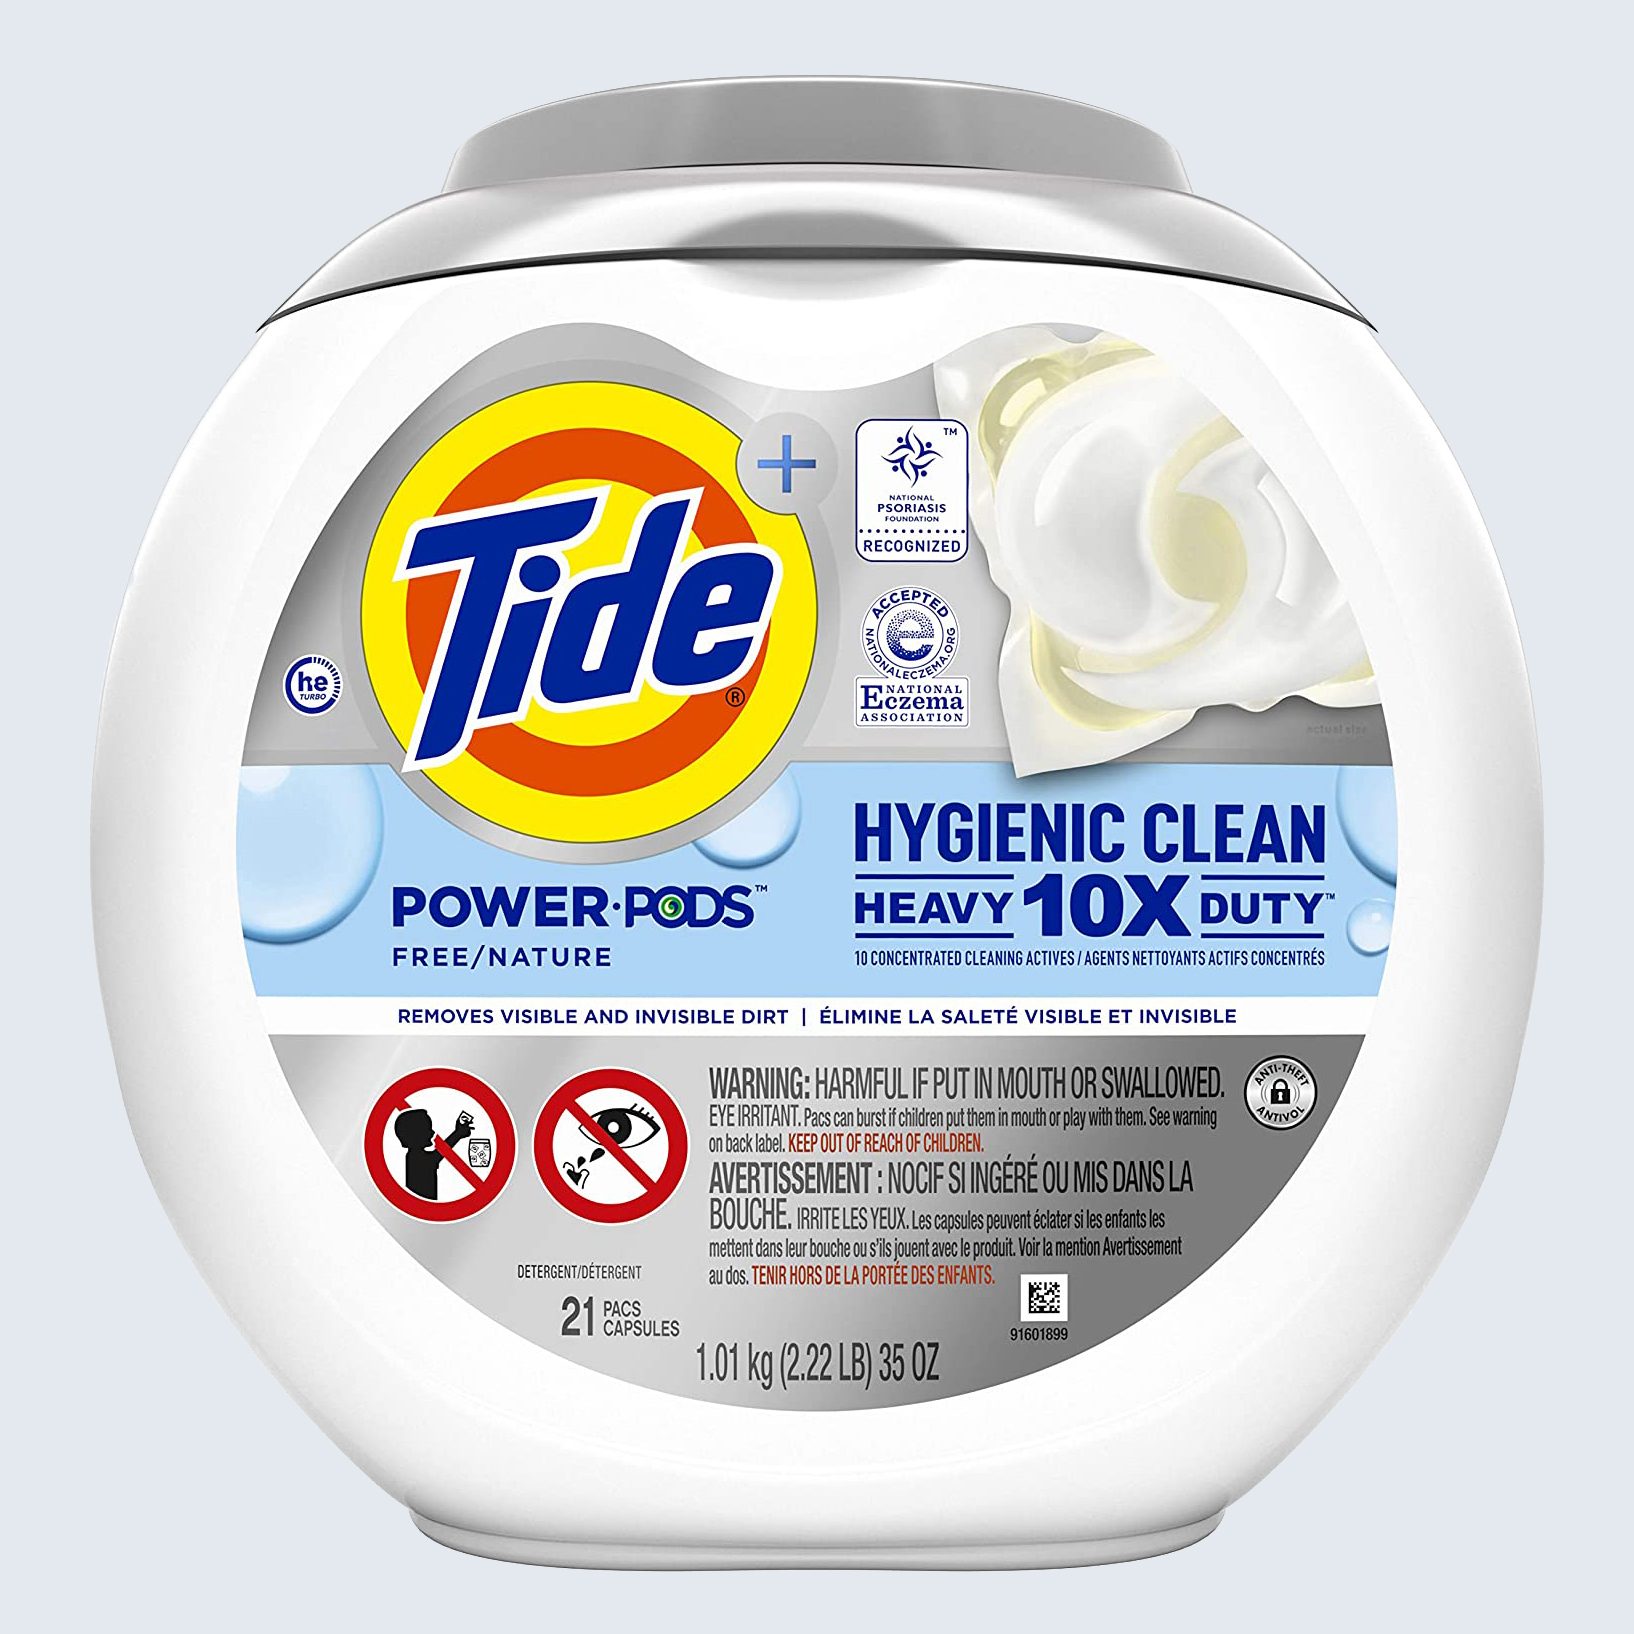 10 Safest Laundry Detergents 2021 — NonToxic, EcoFriendly Detergent